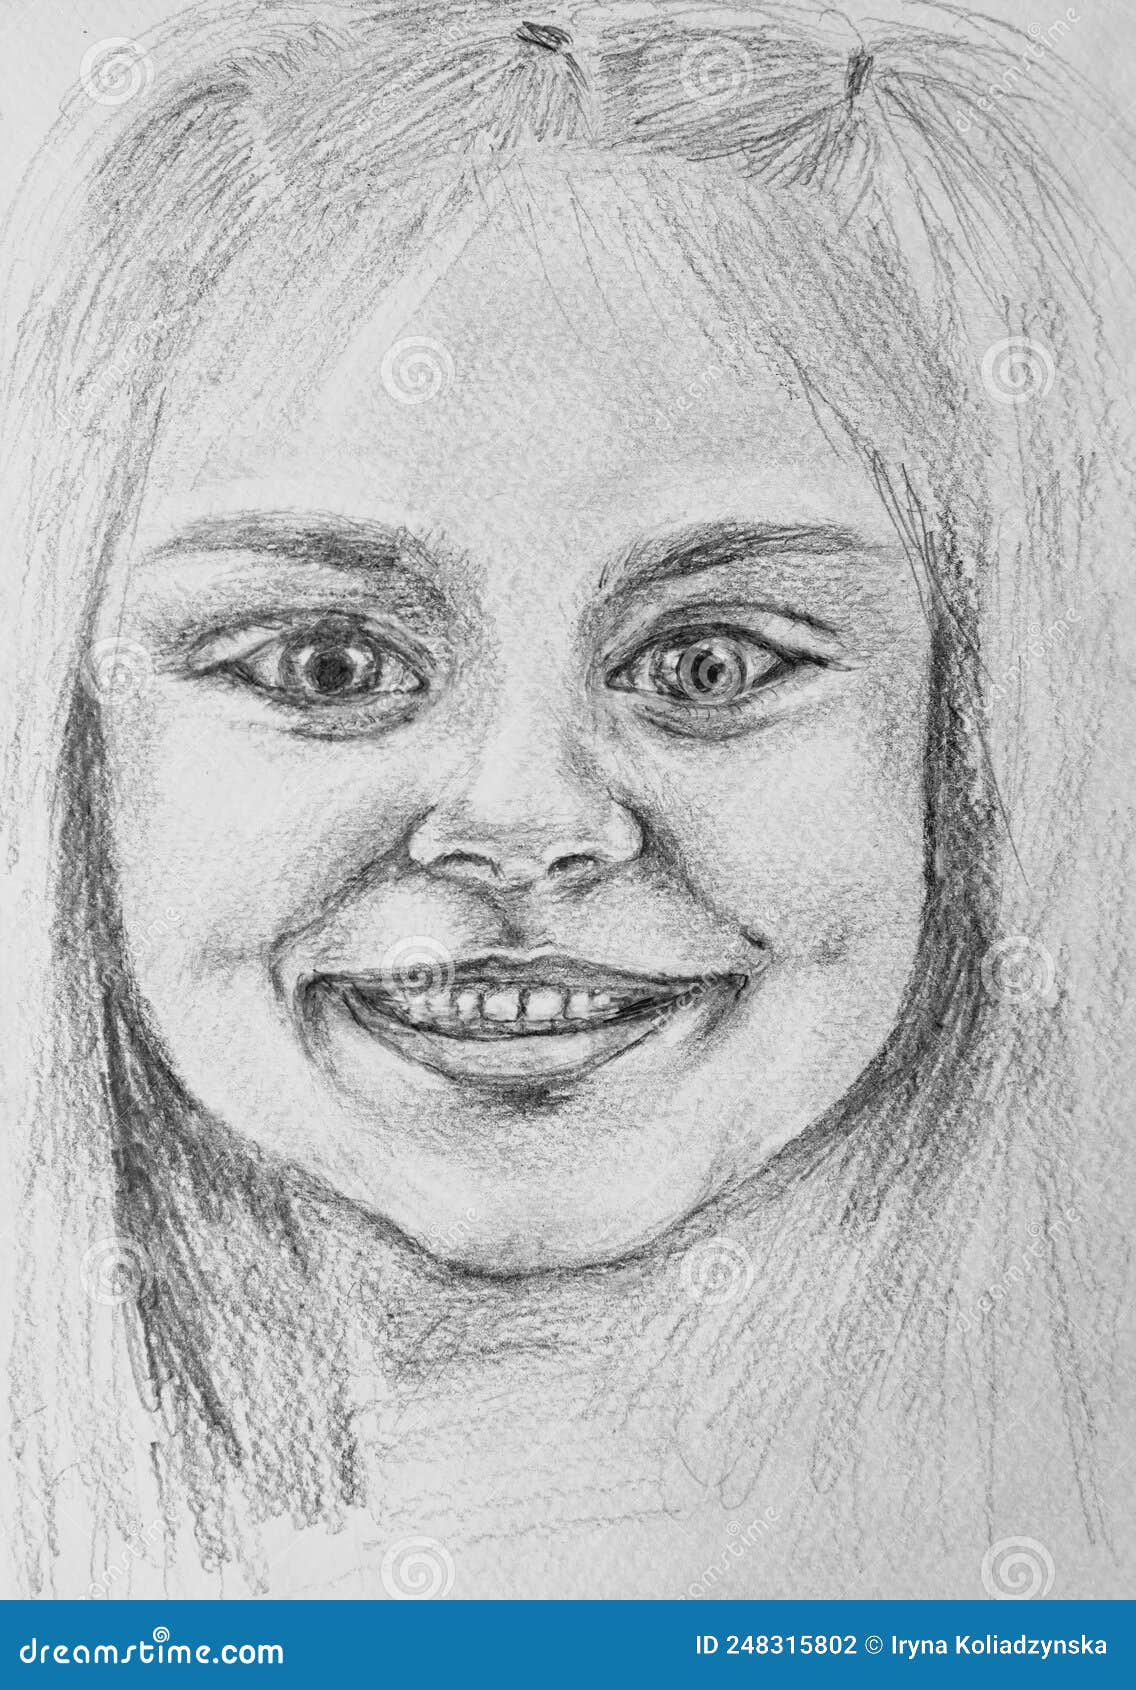 12 girl face drawings | Image-saigonsouth.com.vn